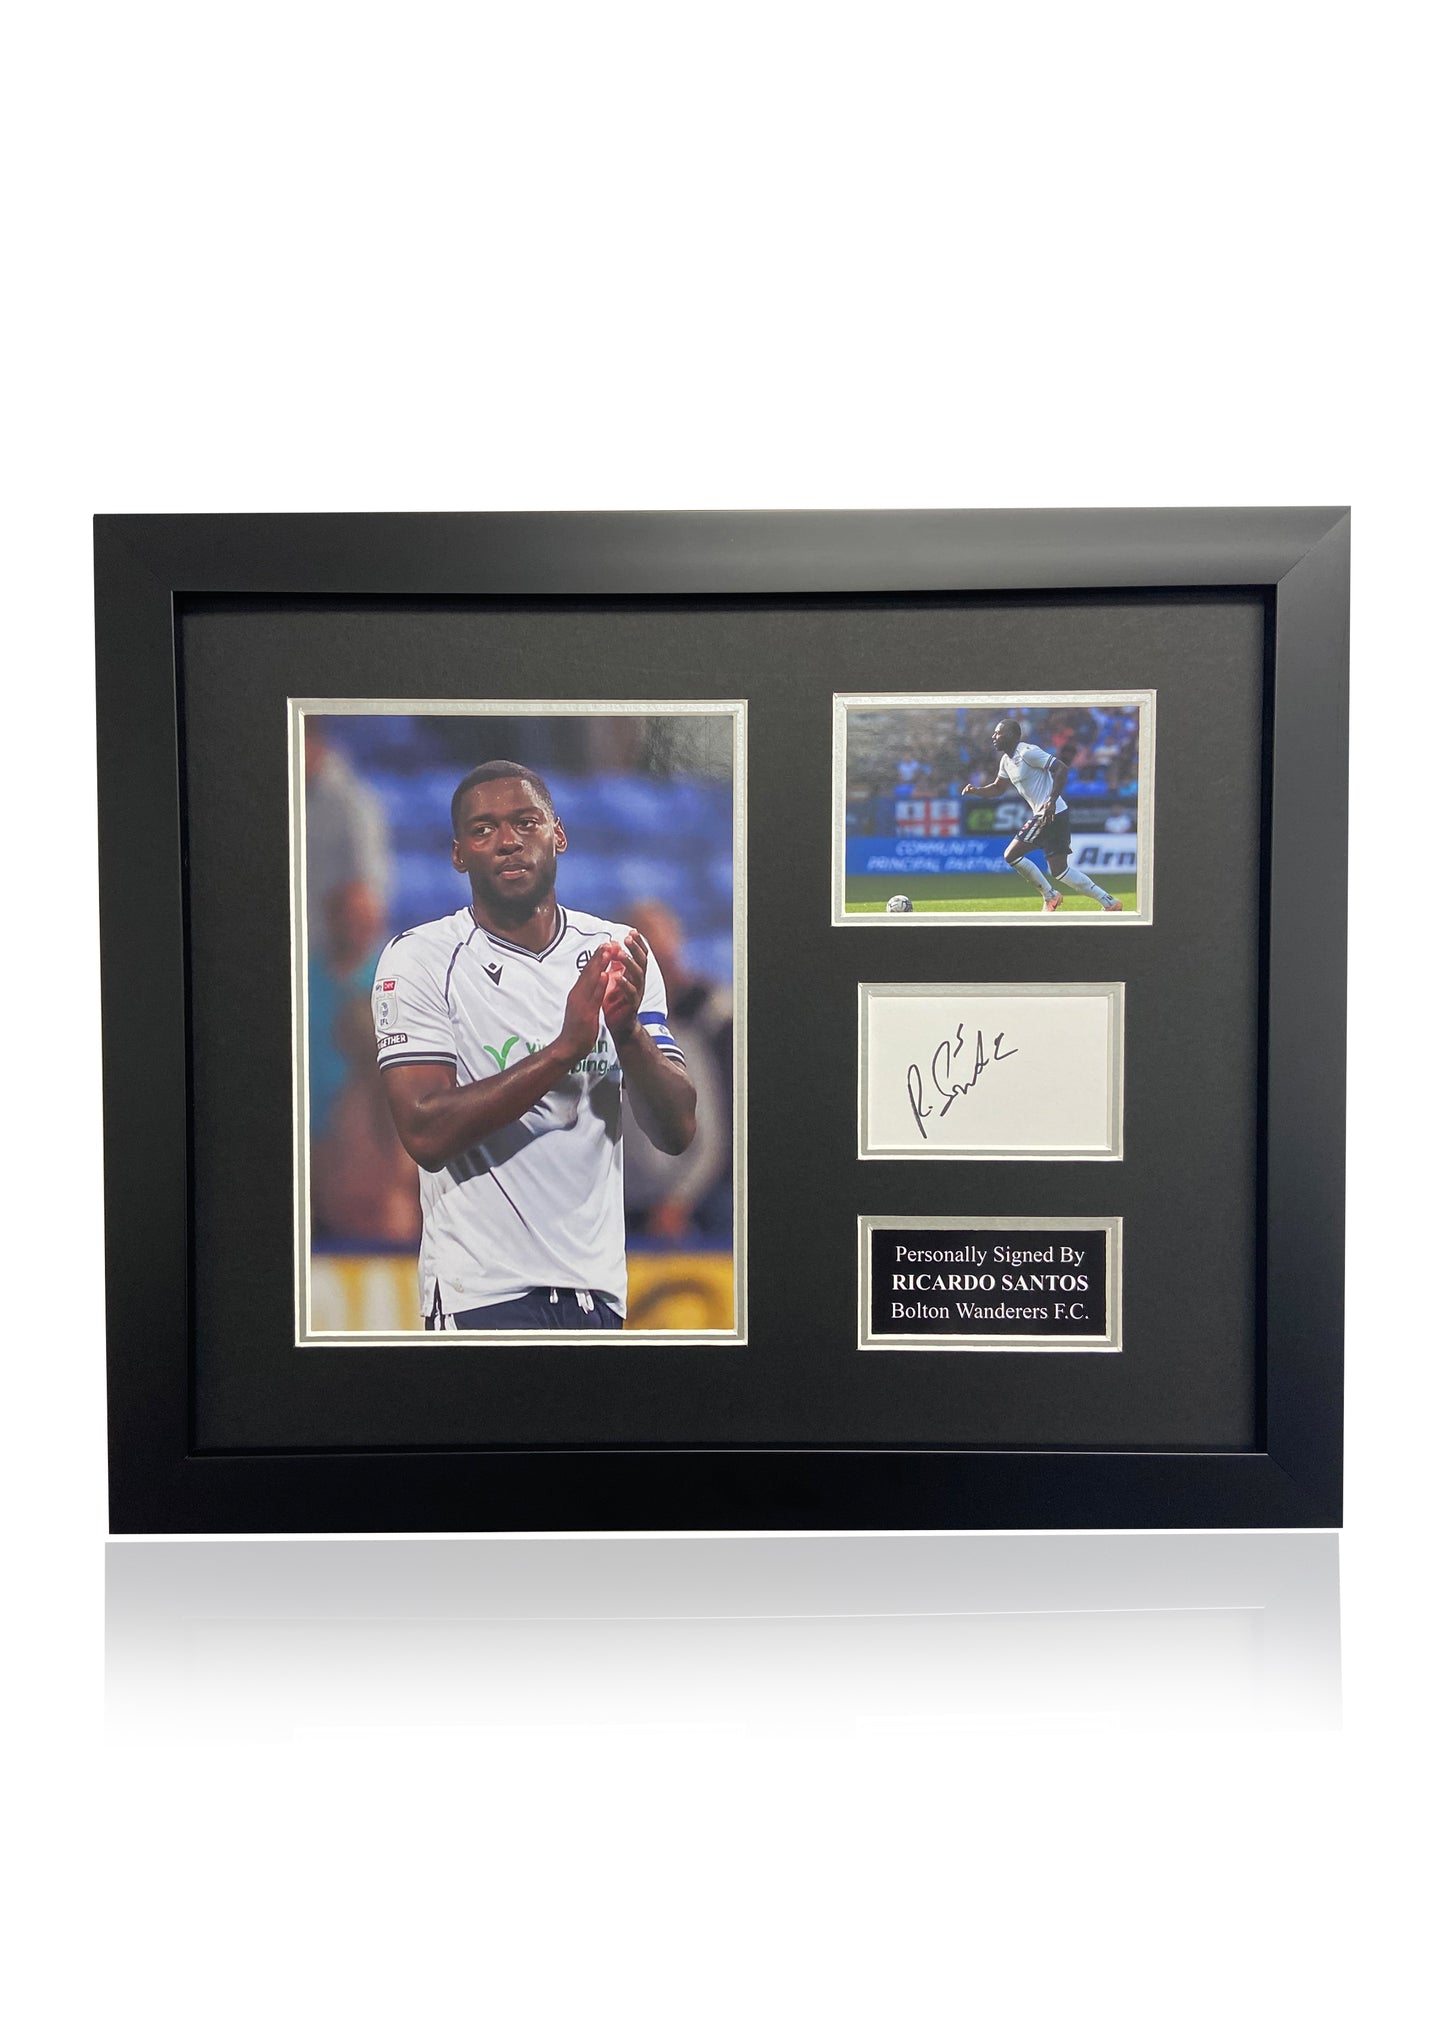 Ricardo Santos Bolton Wanderers F.C. signed framed photo card montage